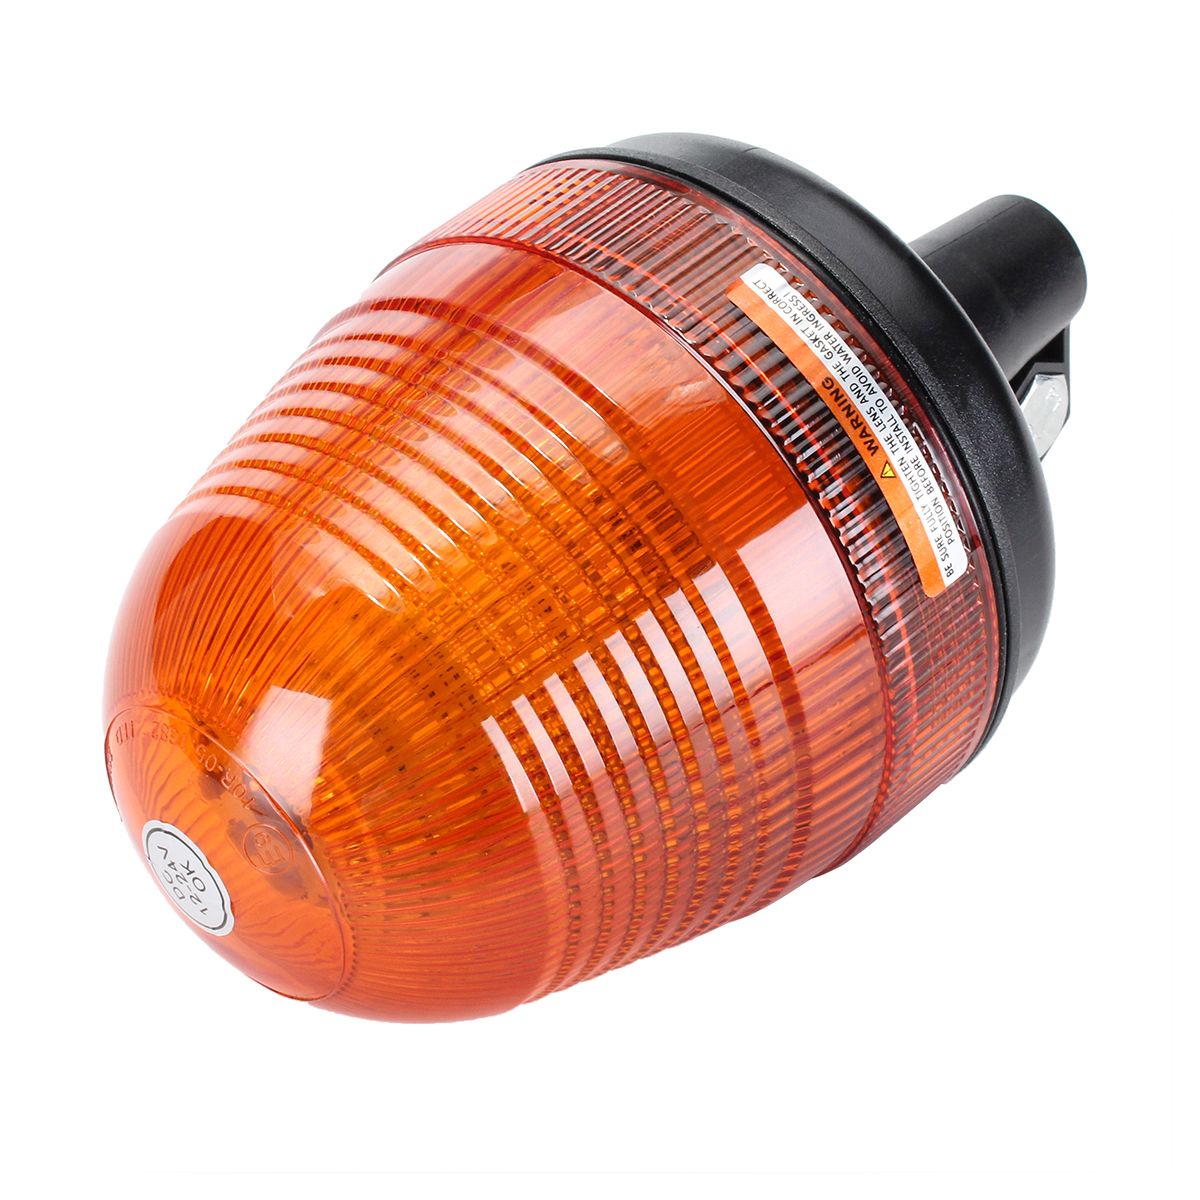 60-LED-Rotating-Flashing-Light-Amber-Beacon-DIN-Pole-Mount-Tractor-Warning-Light-Lamp-1224V-1701182